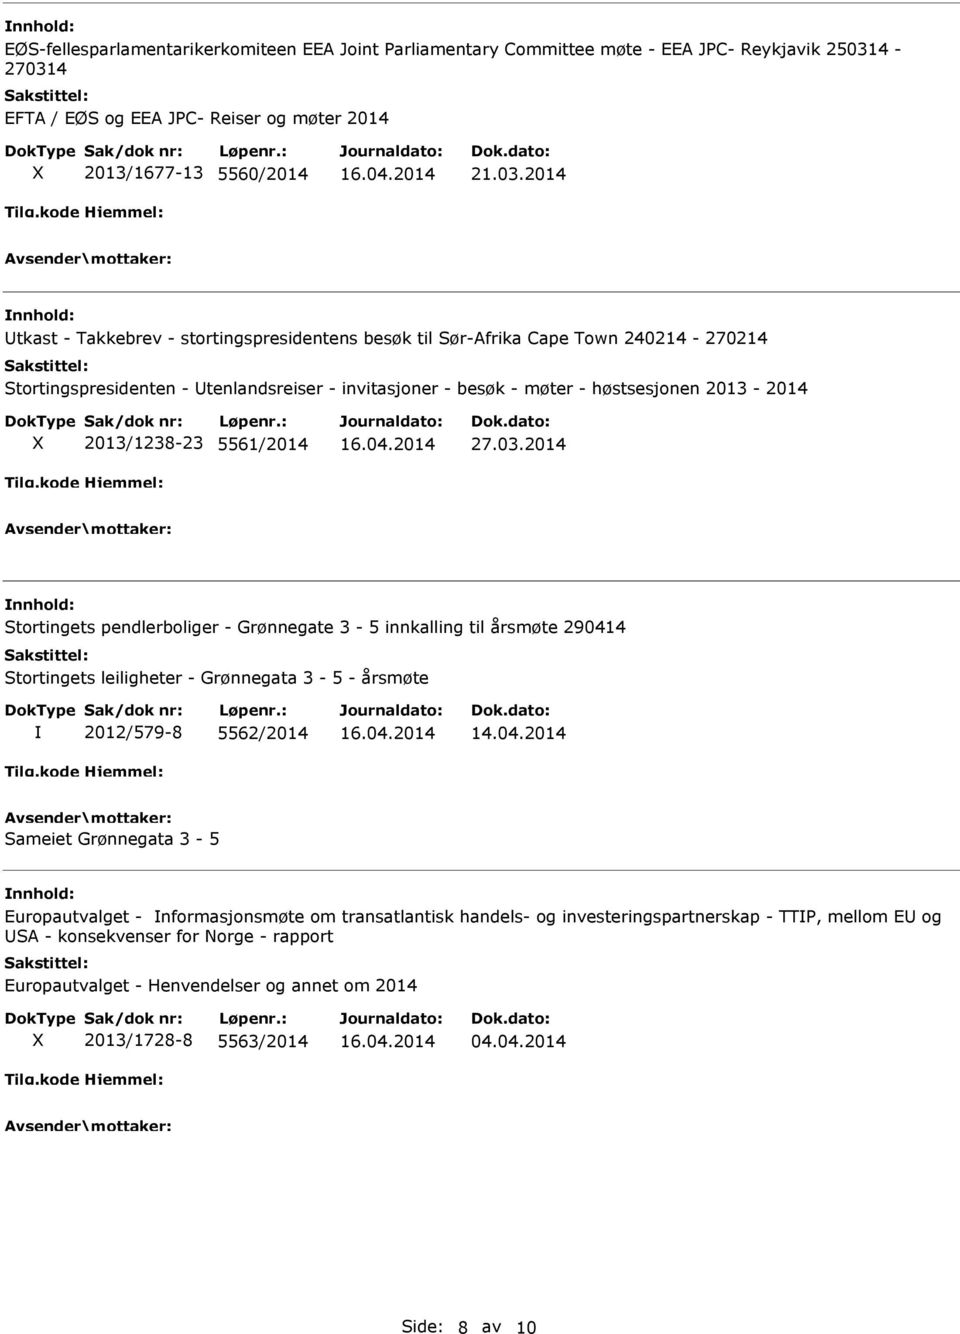 4 EFTA / EØS og EEA JPC- Reiser og møter 2014 2013/1677-13 5560/2014 21.03.